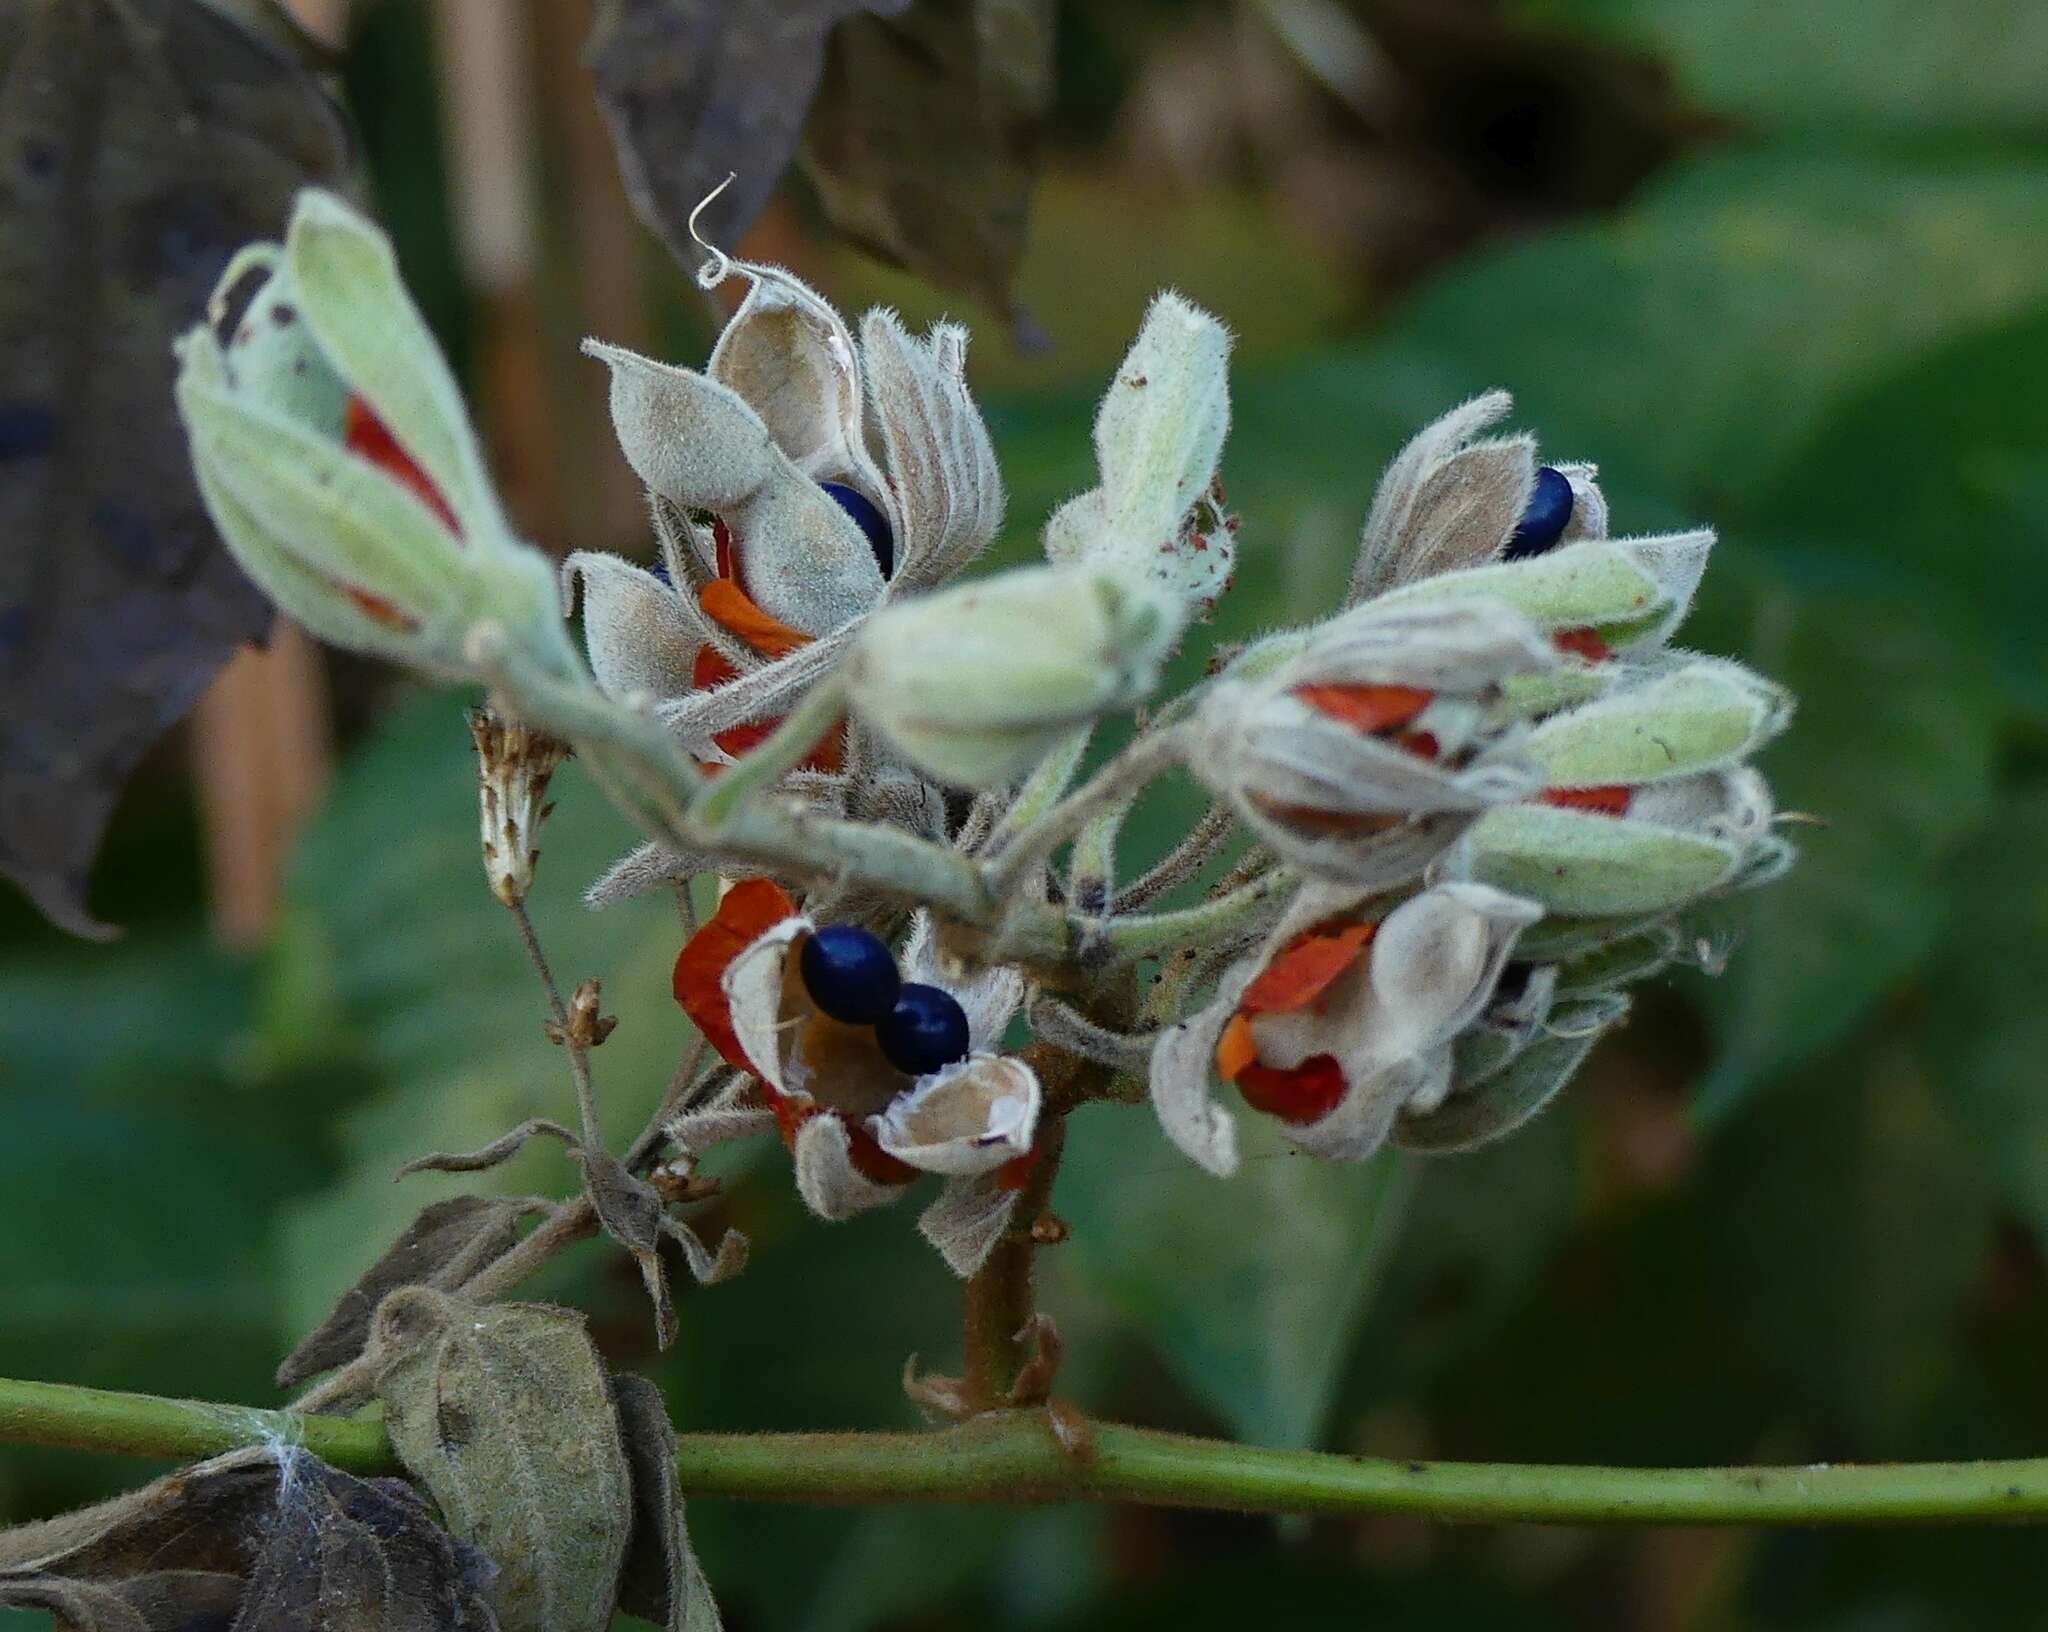 Image of Rhynchosia hirta (Andrews) Meikle & Verdc.